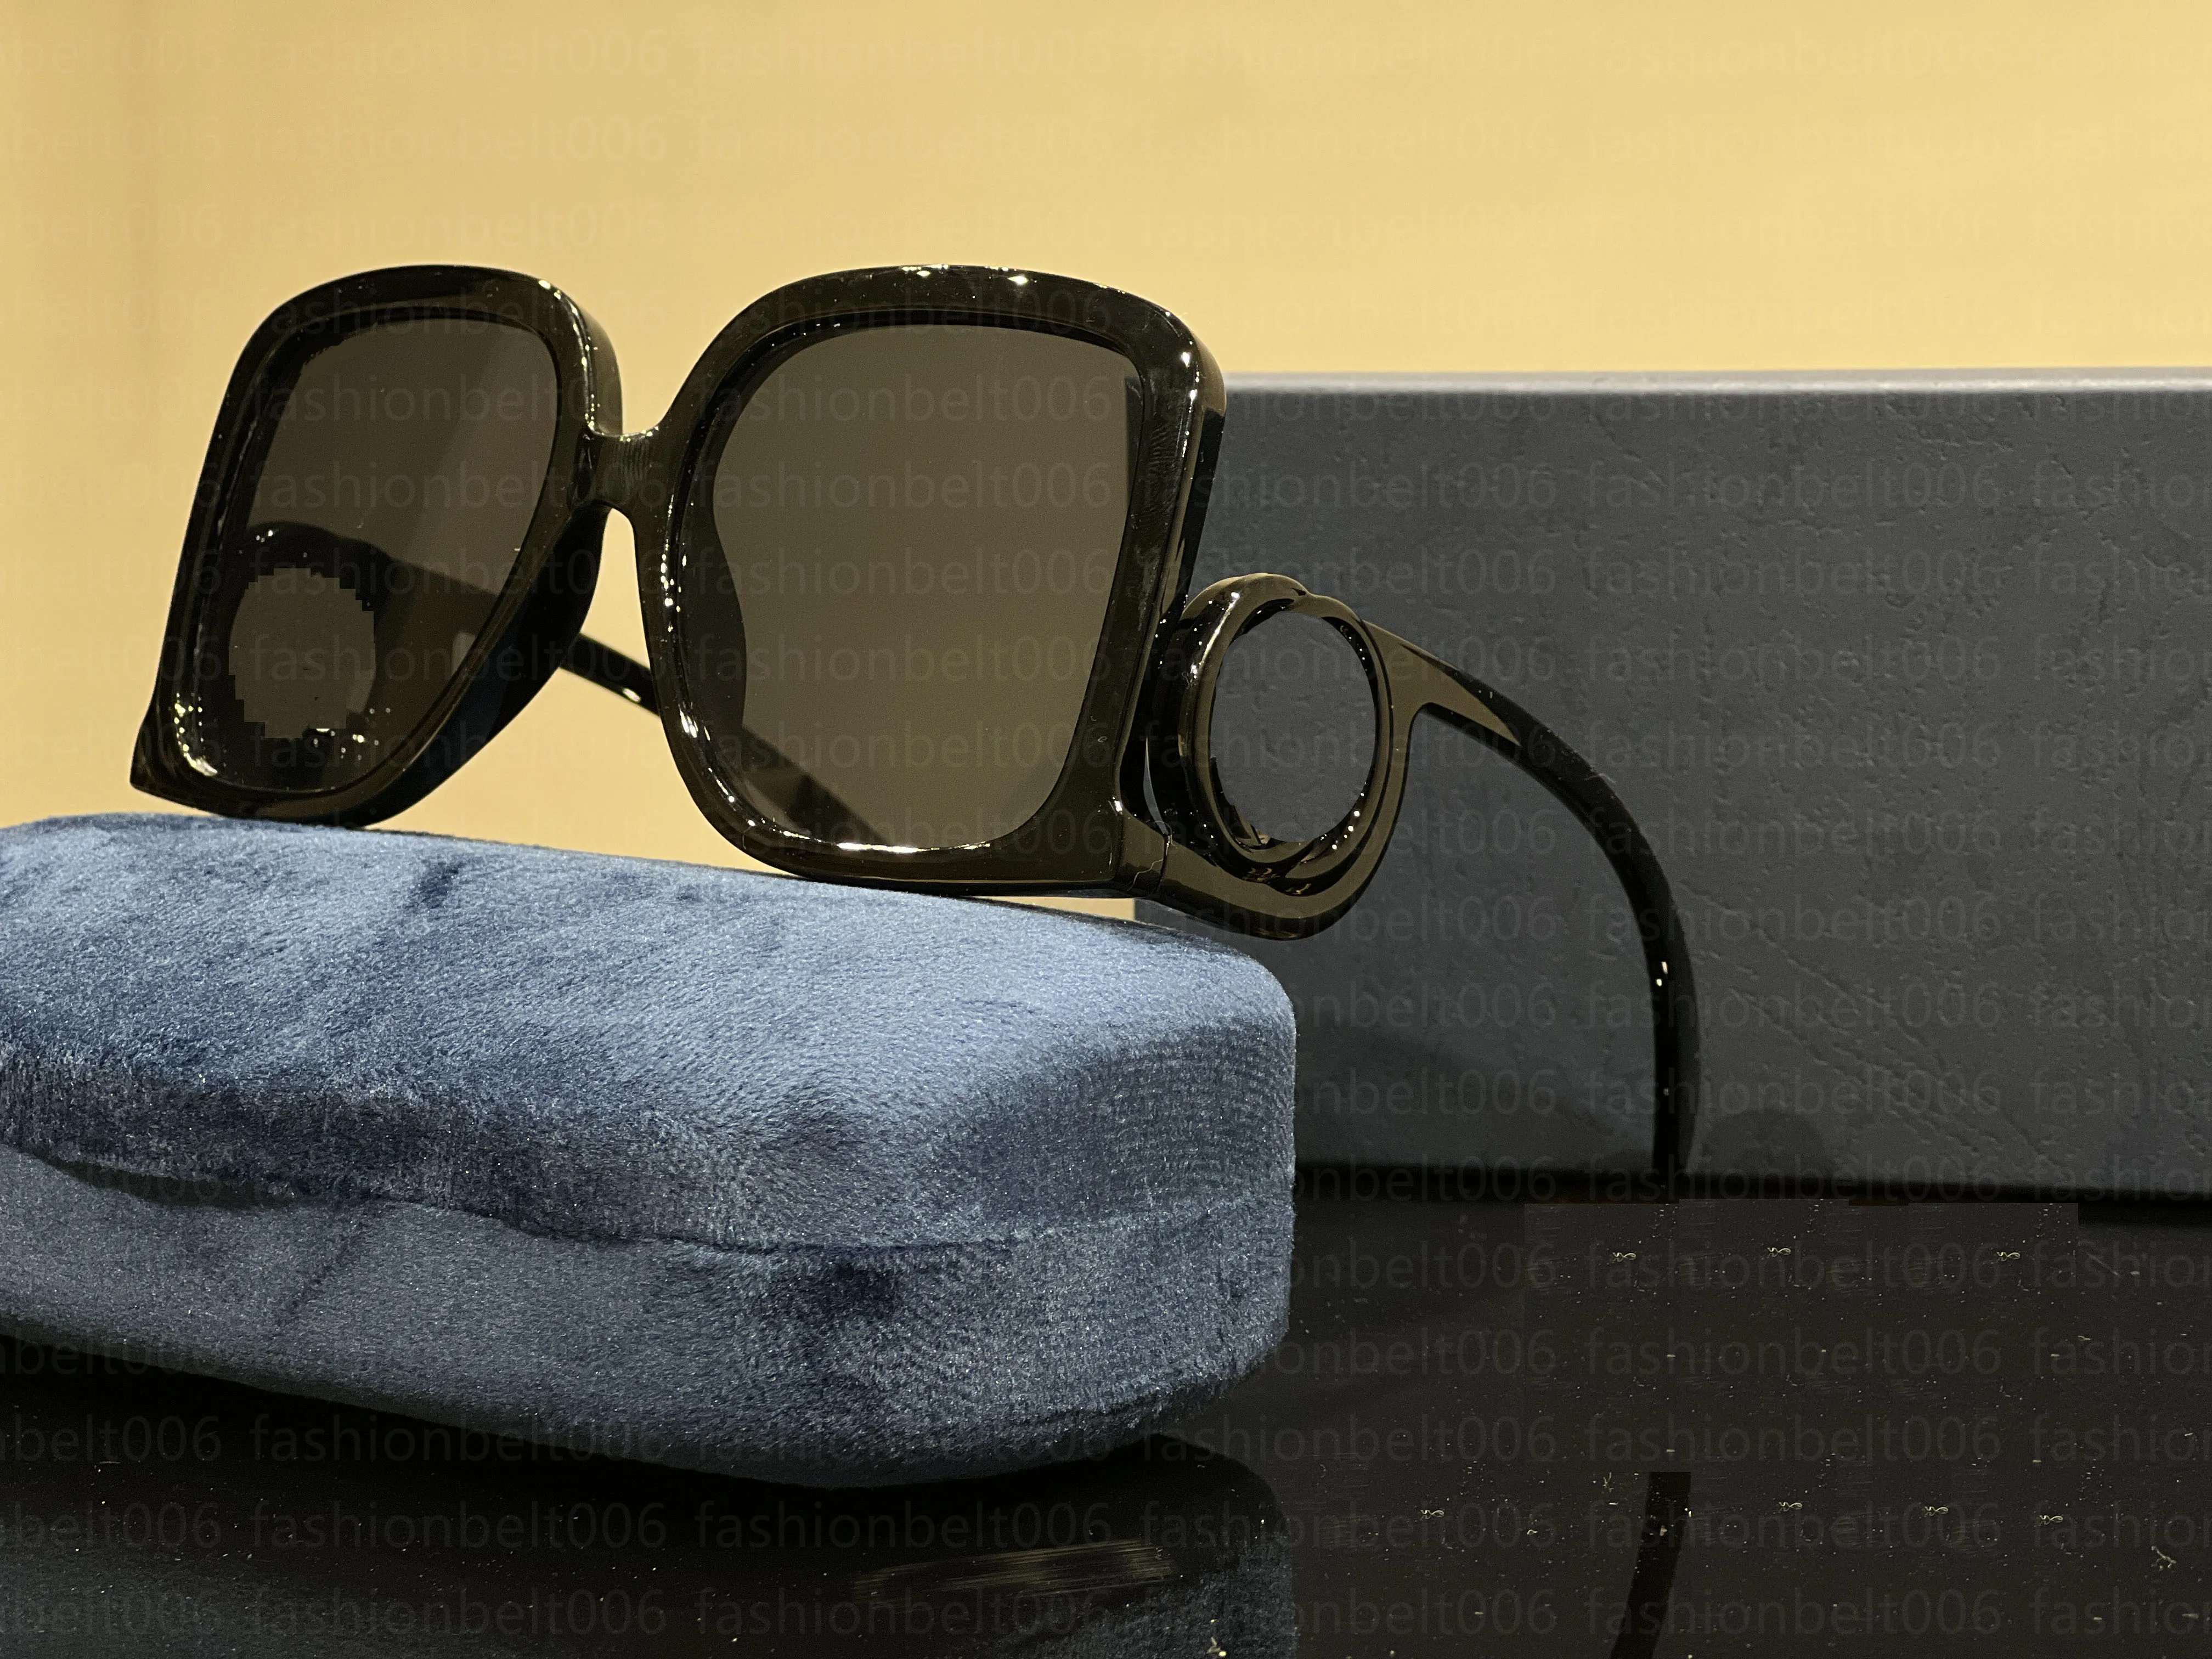 New Men 's Square Fashion Sunglasses, Women's Black Frame Silver Mirror Letter Lenses, 디자이너 브랜드 선글라스, Box Fashionbelt006과 함께 제공되는 두 가지 스타일